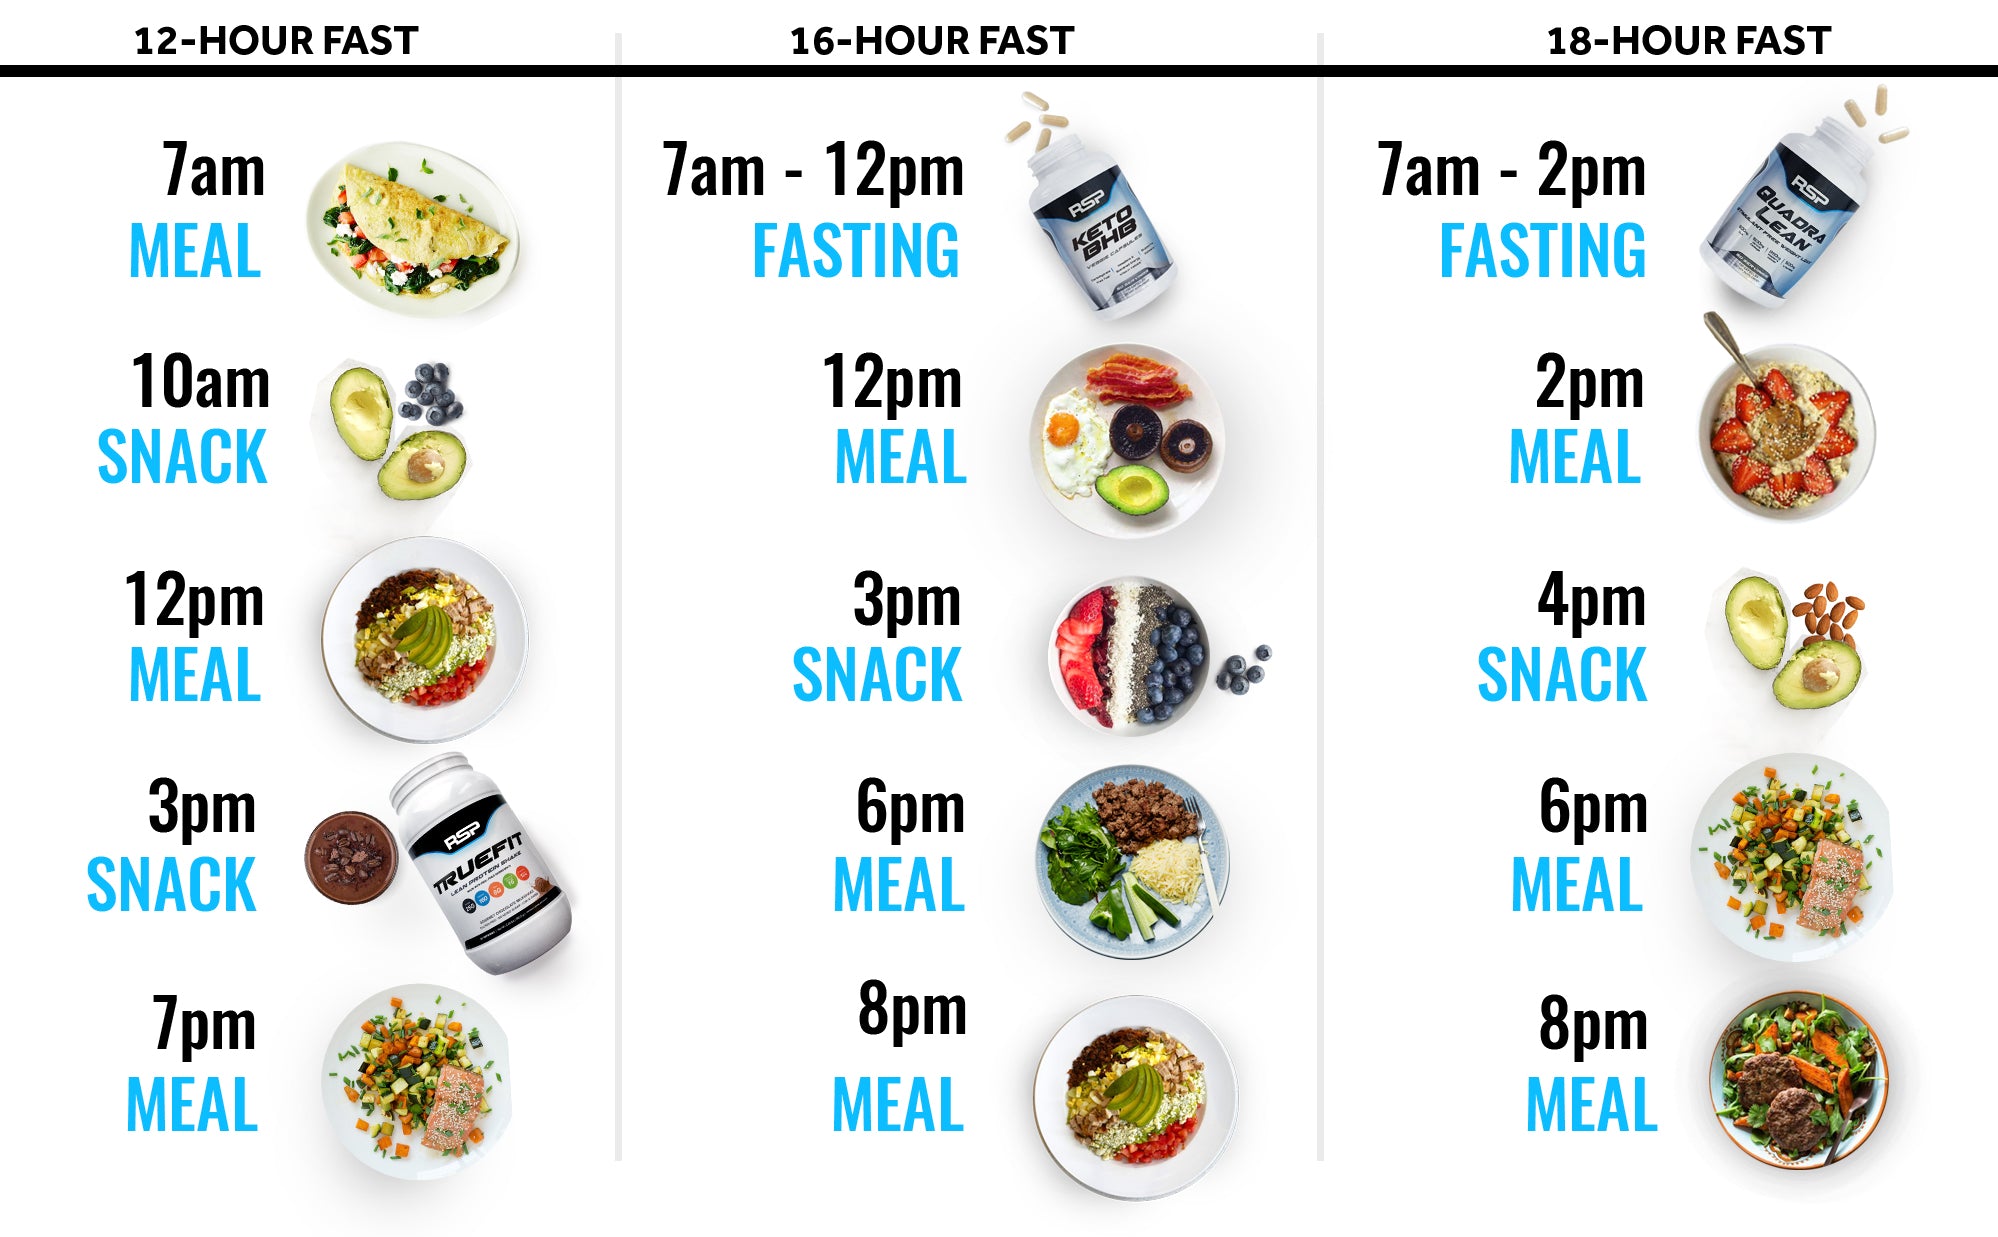 Intermittent Fasting Chart